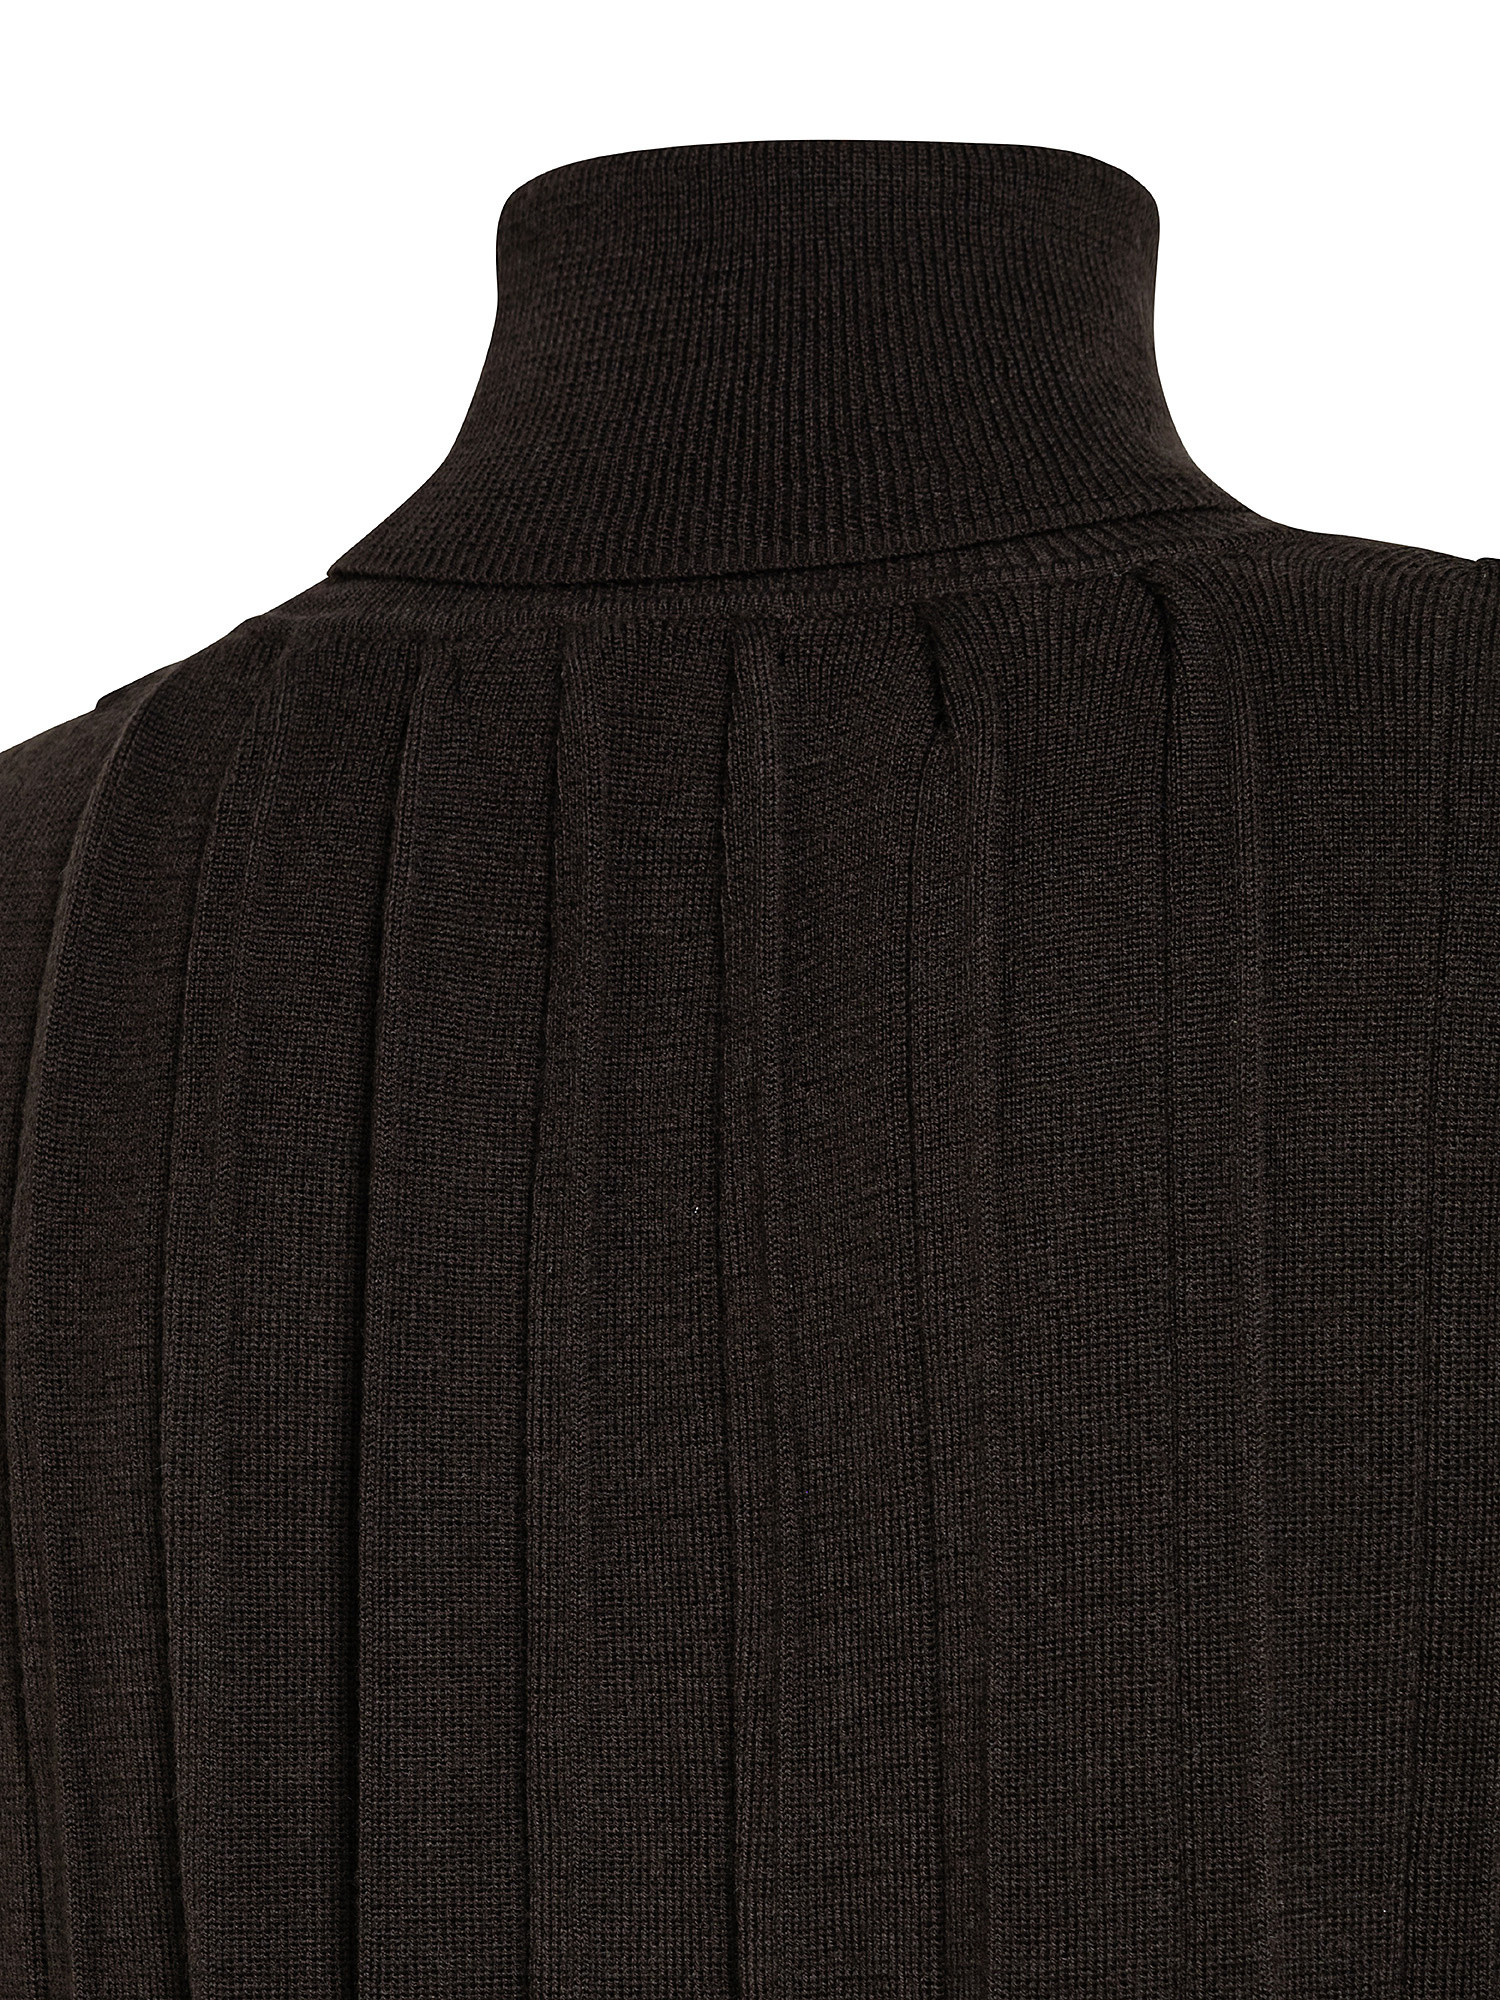 Turtleneck sweater with logo, Dark Brown, large image number 2